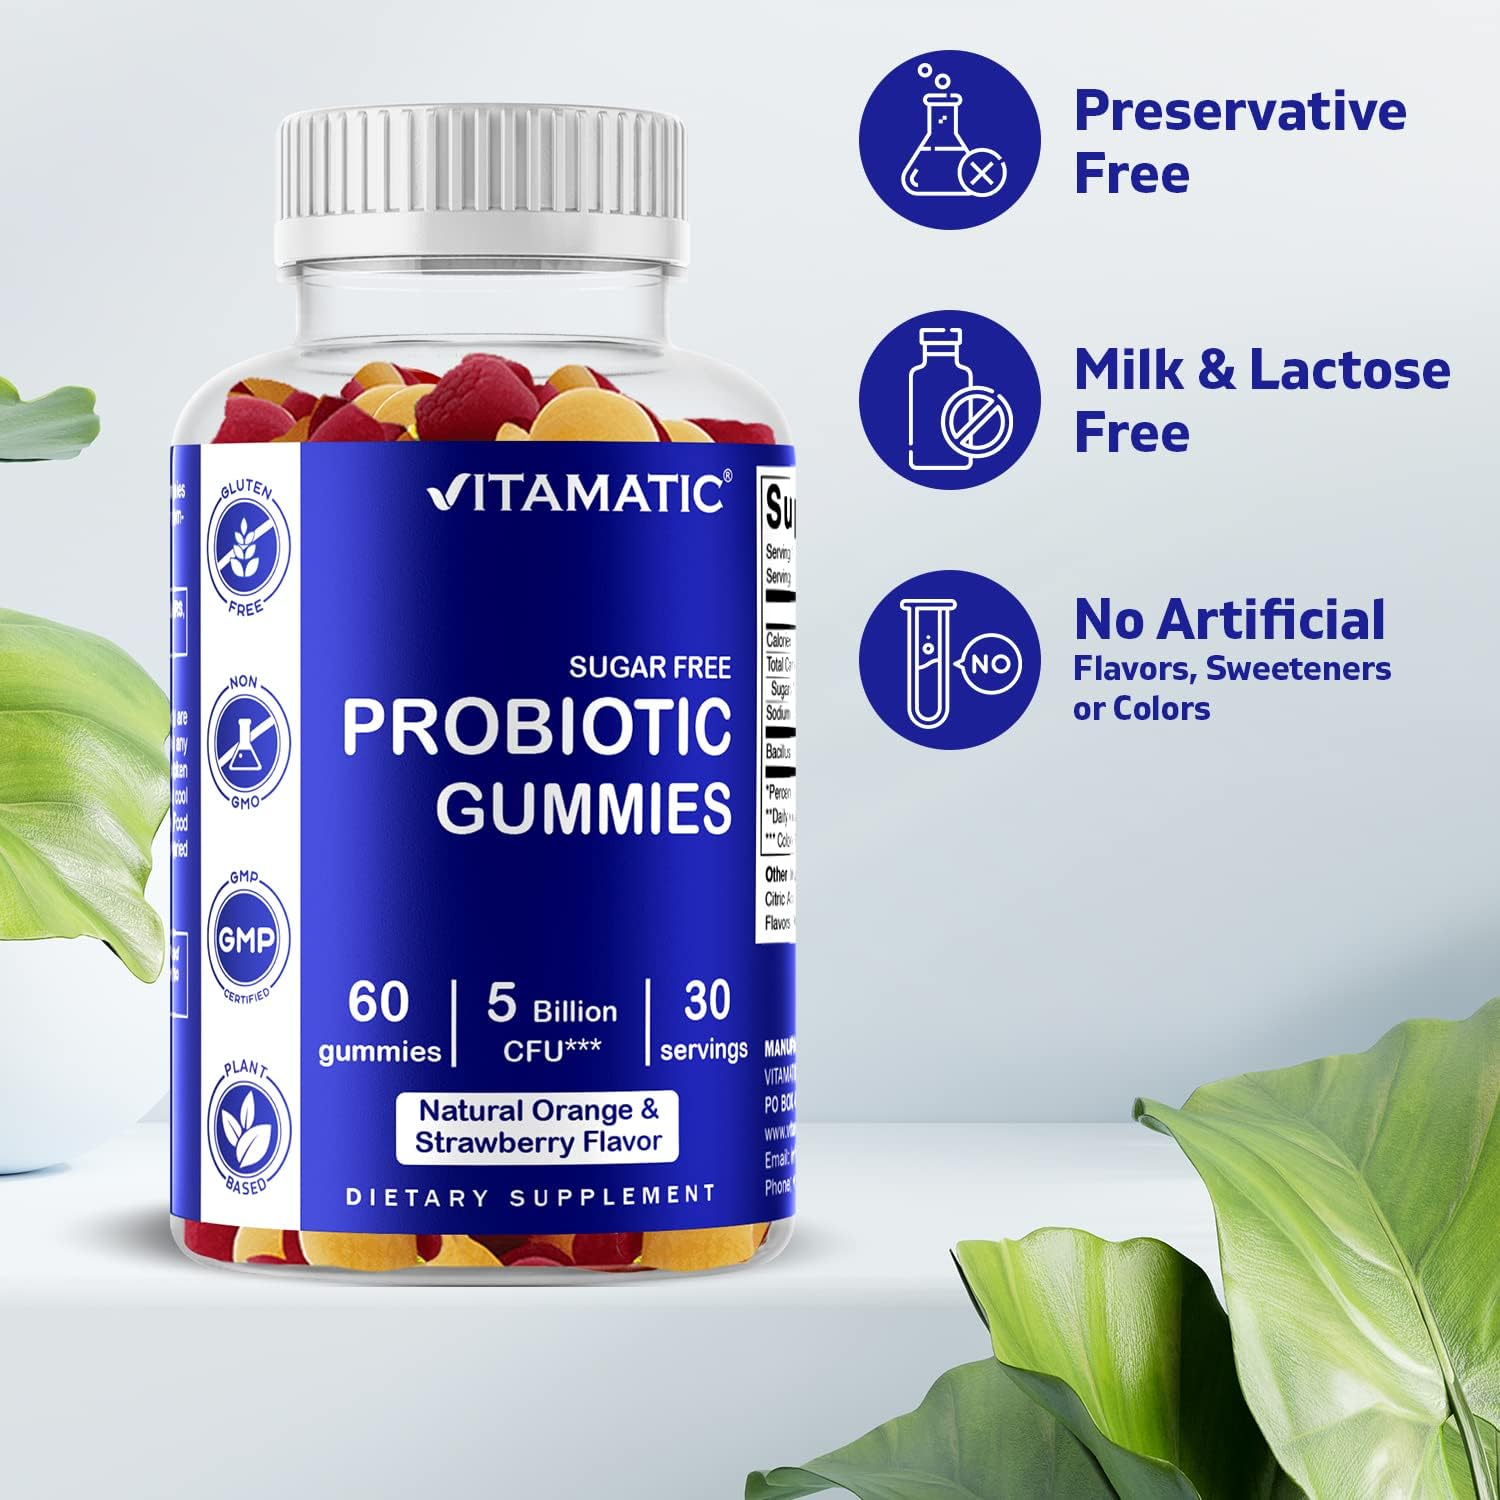 Vitamatic Probiotic Gummies Review